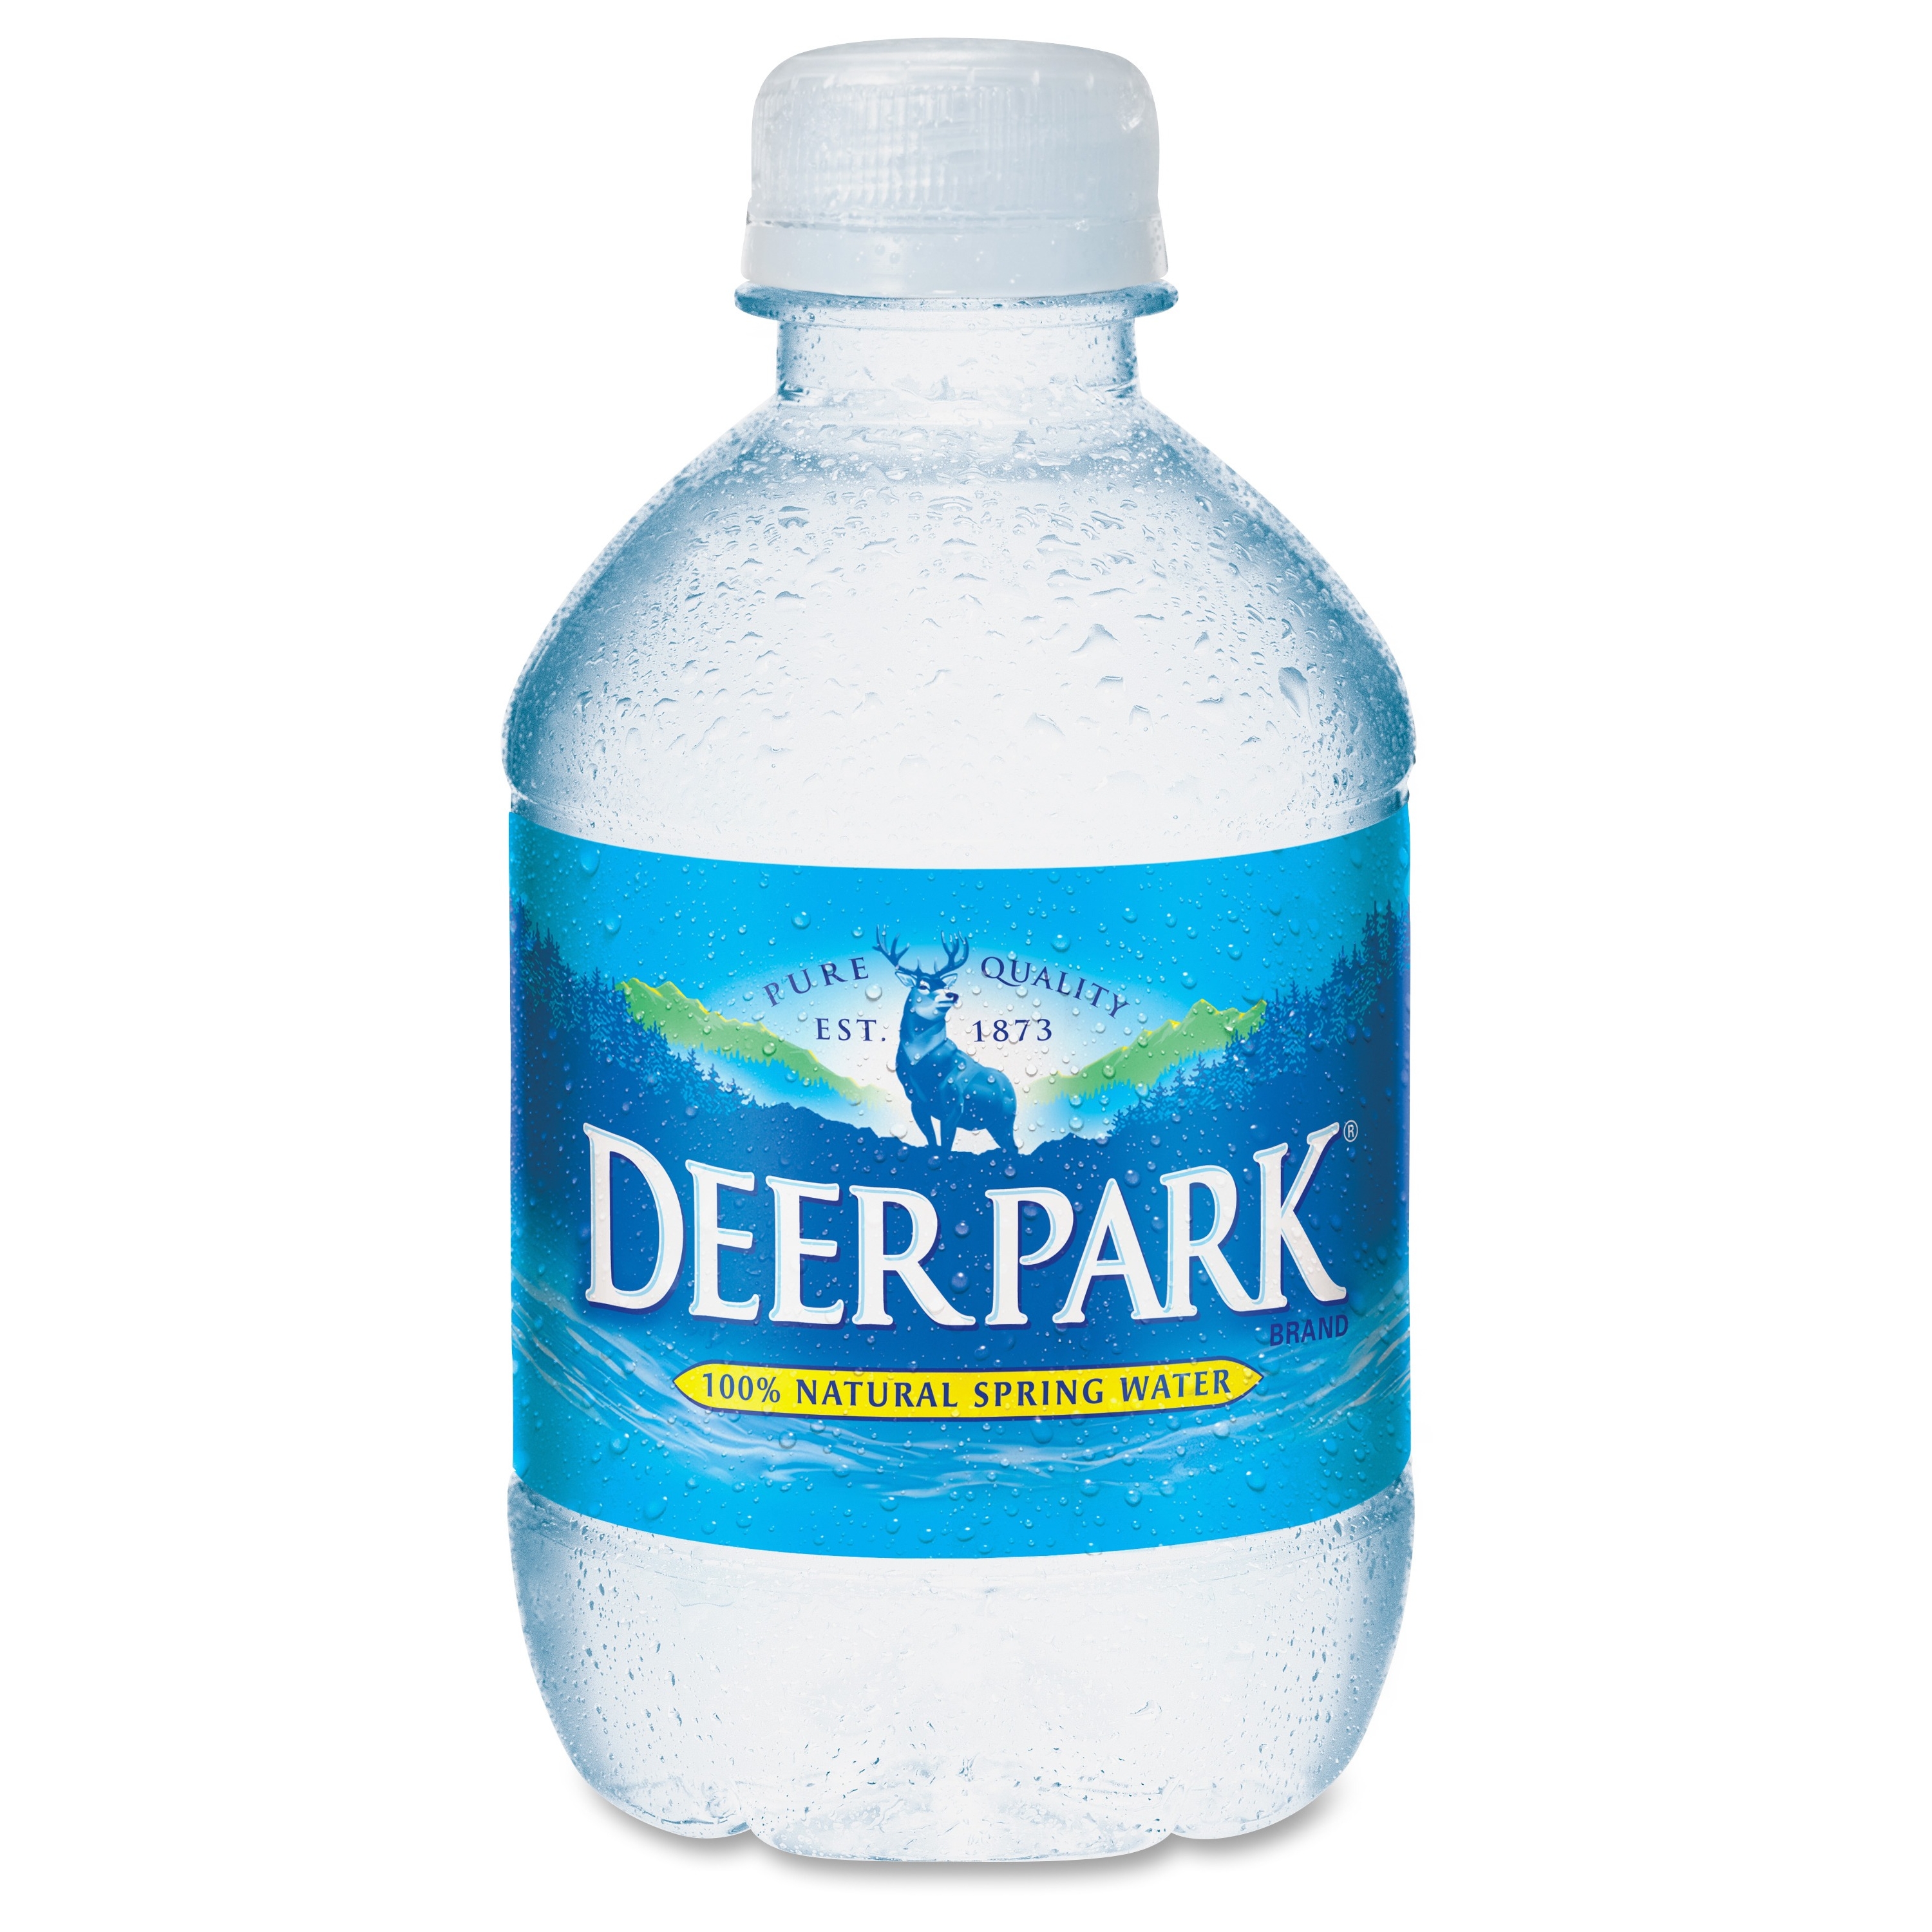 Deer Park Natural Spring Water - 1 per carton - LD Products